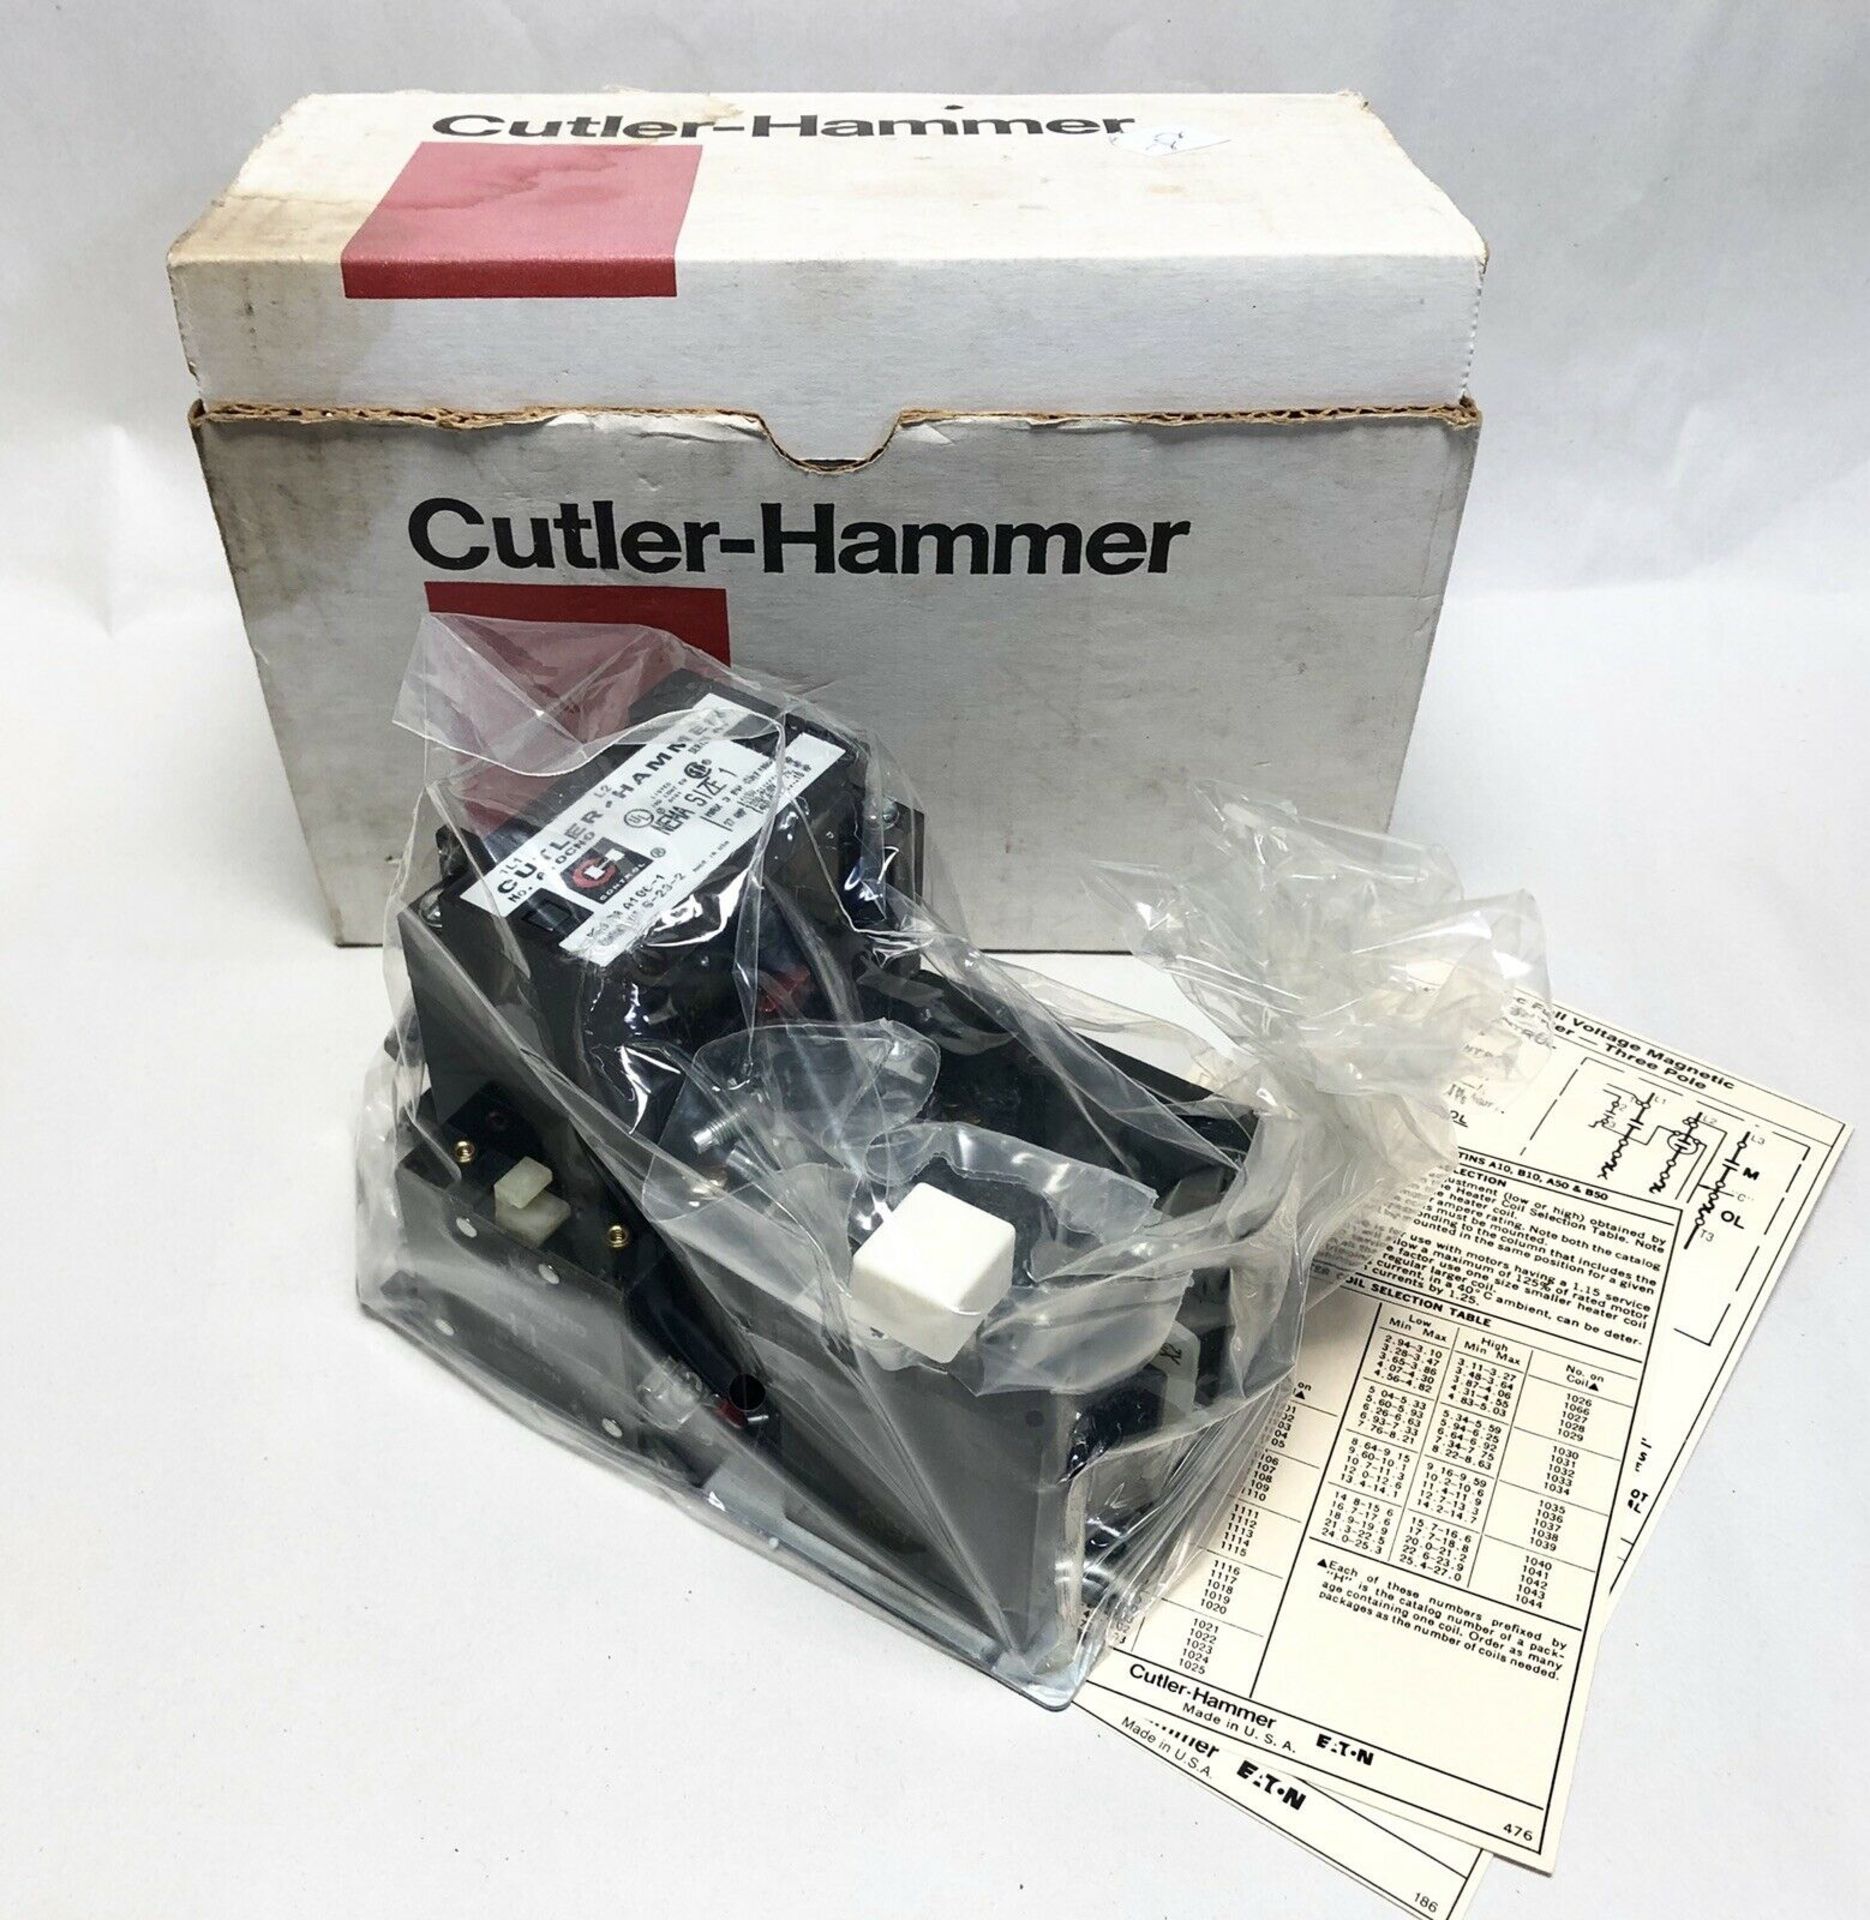 New Cutler-Hammer Motor Starter